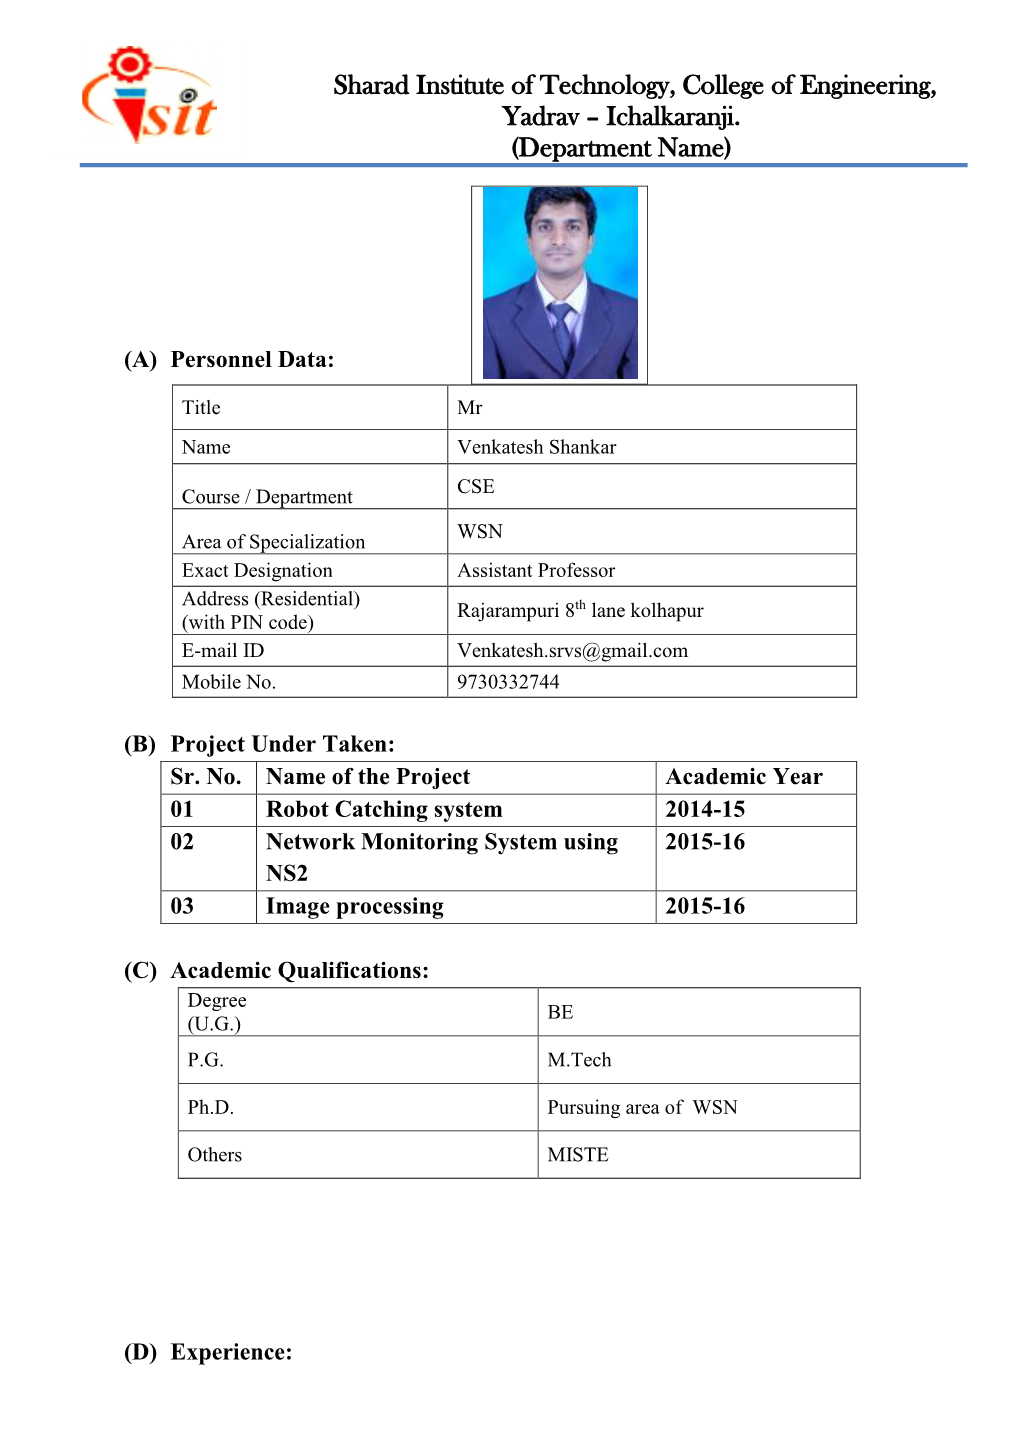 Sharad Institute of Technology, College of Engineering, Yadrav – Ichalkaranji. (Department Name)